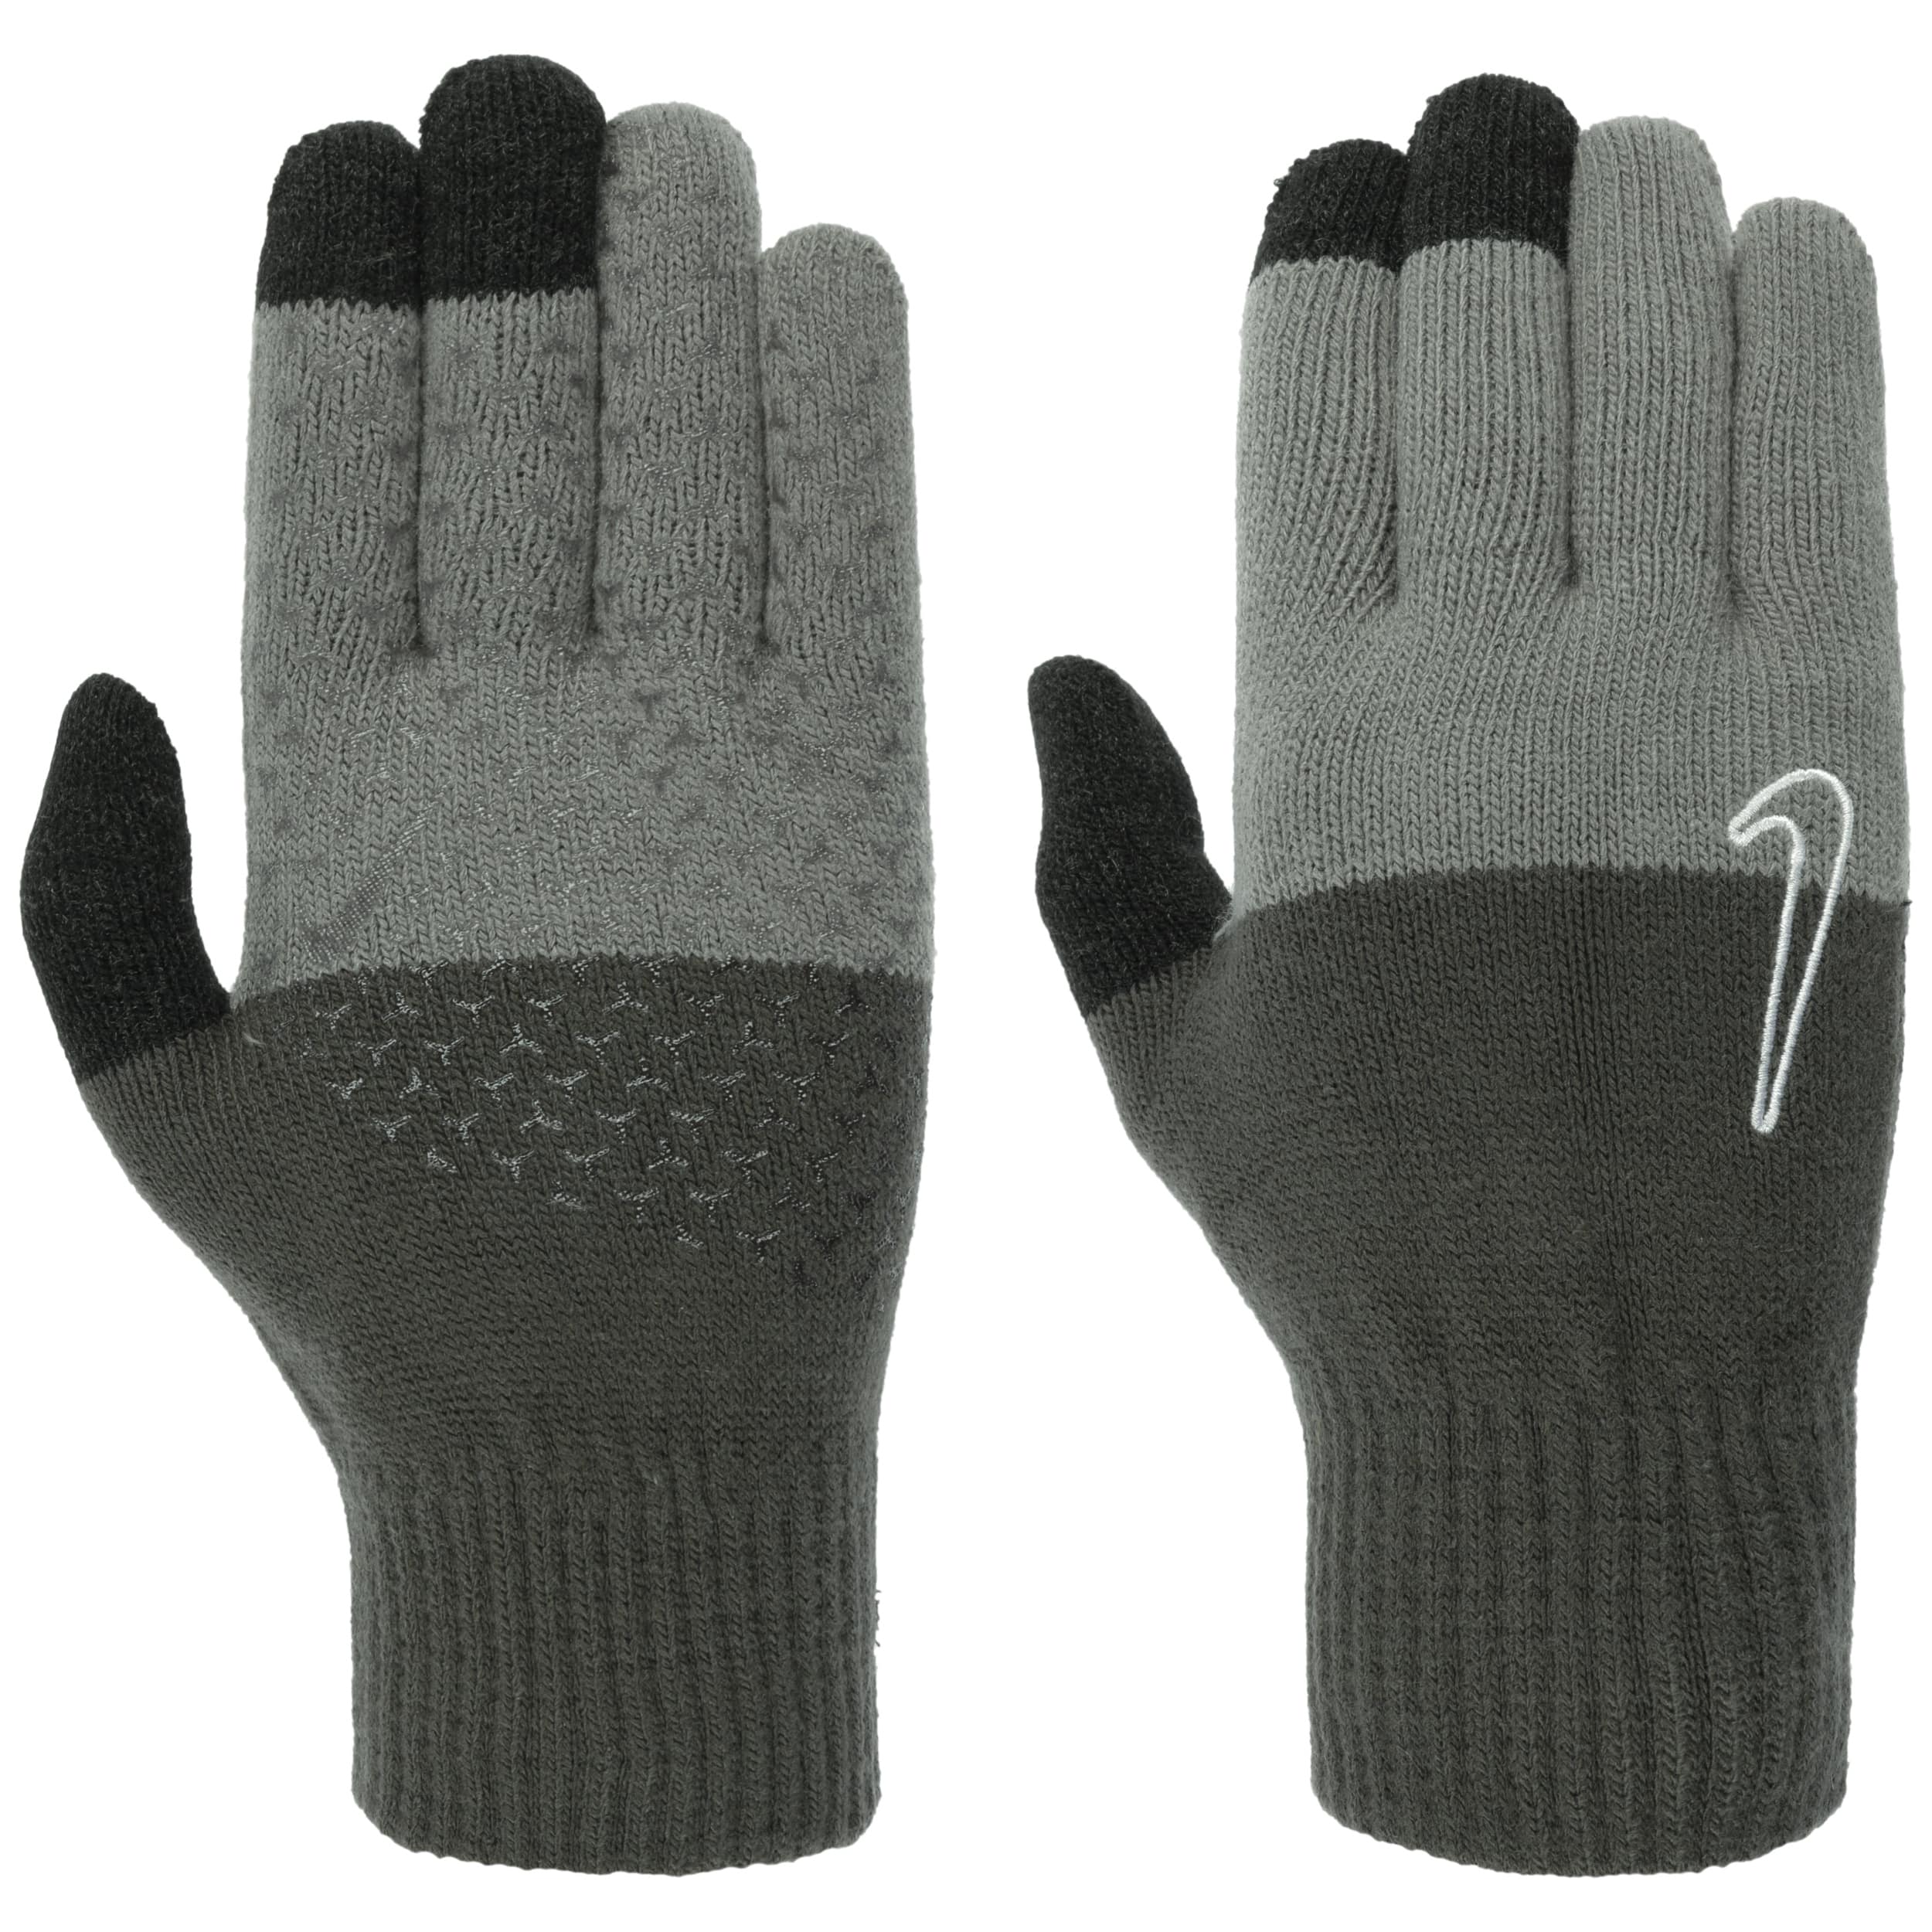 https://img.hatshopping.com/Knit-Tech-Grip-TG-2-0-Graphic-Gloves-by-Nike-anthracite.65470_rf16.jpg